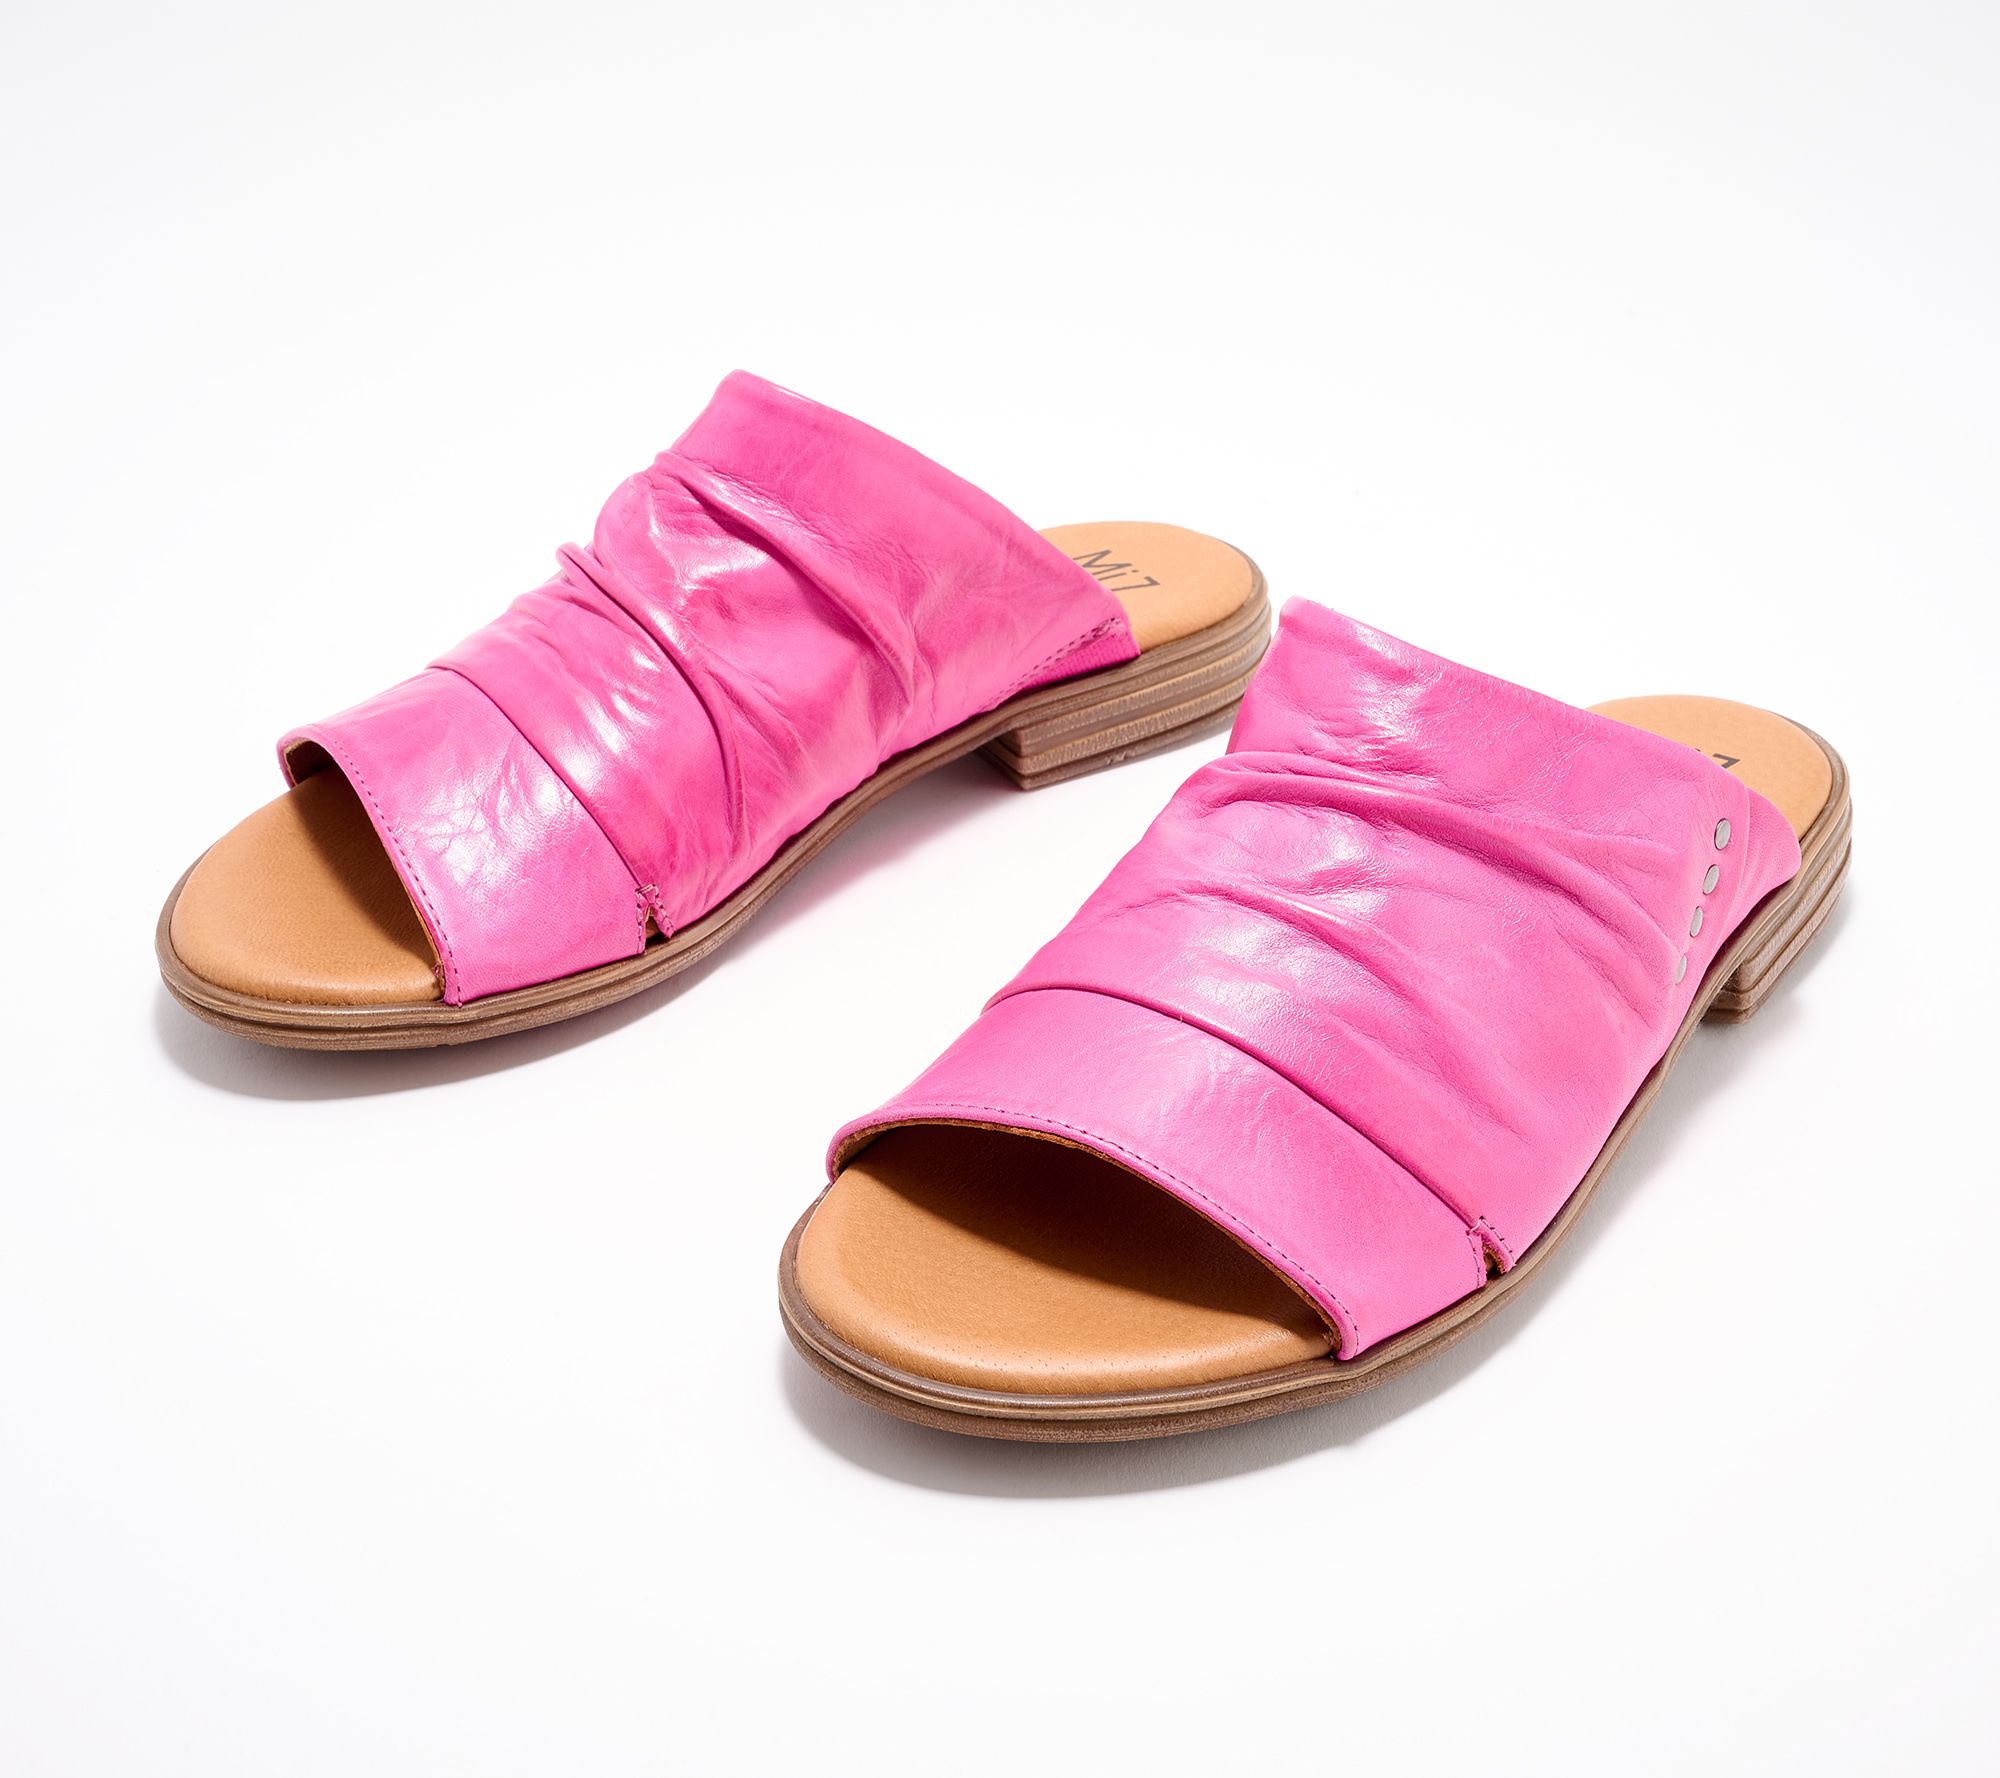 Miz Mooz Leather Slide Sandals - Dandelion - QVC.com